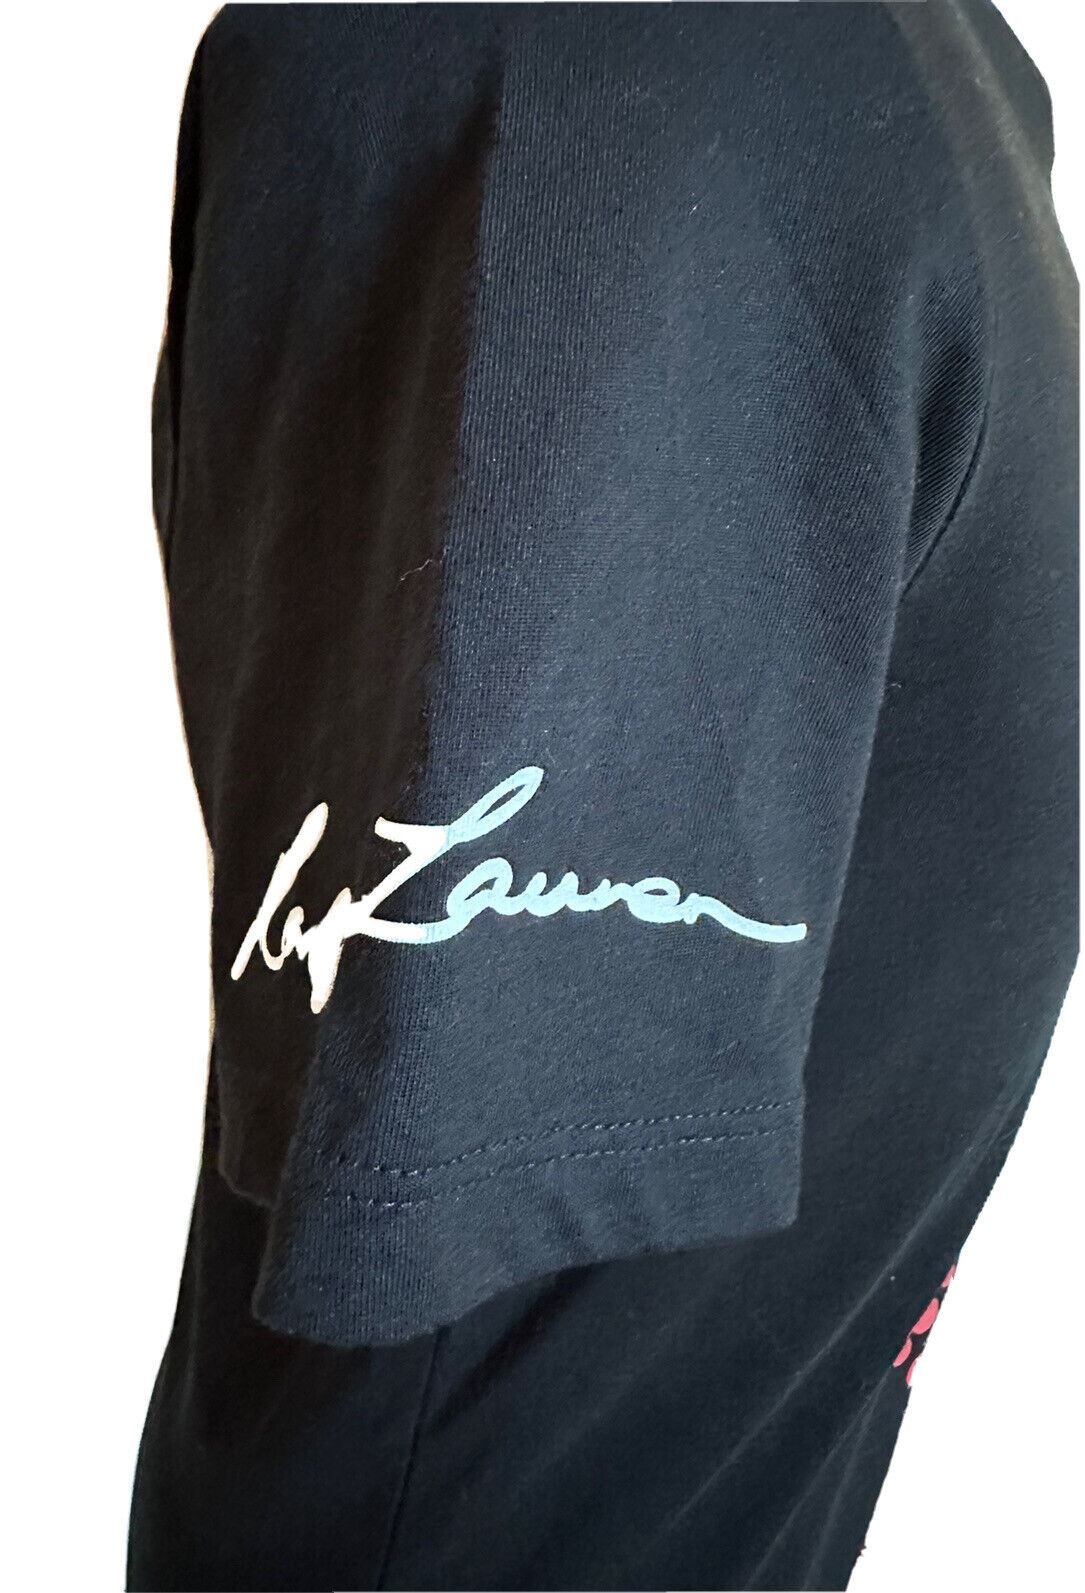 Neu mit Etikett: 65 $ Polo Ralph Lauren Kurzarm-Logo-T-Shirt Schwarz XL 